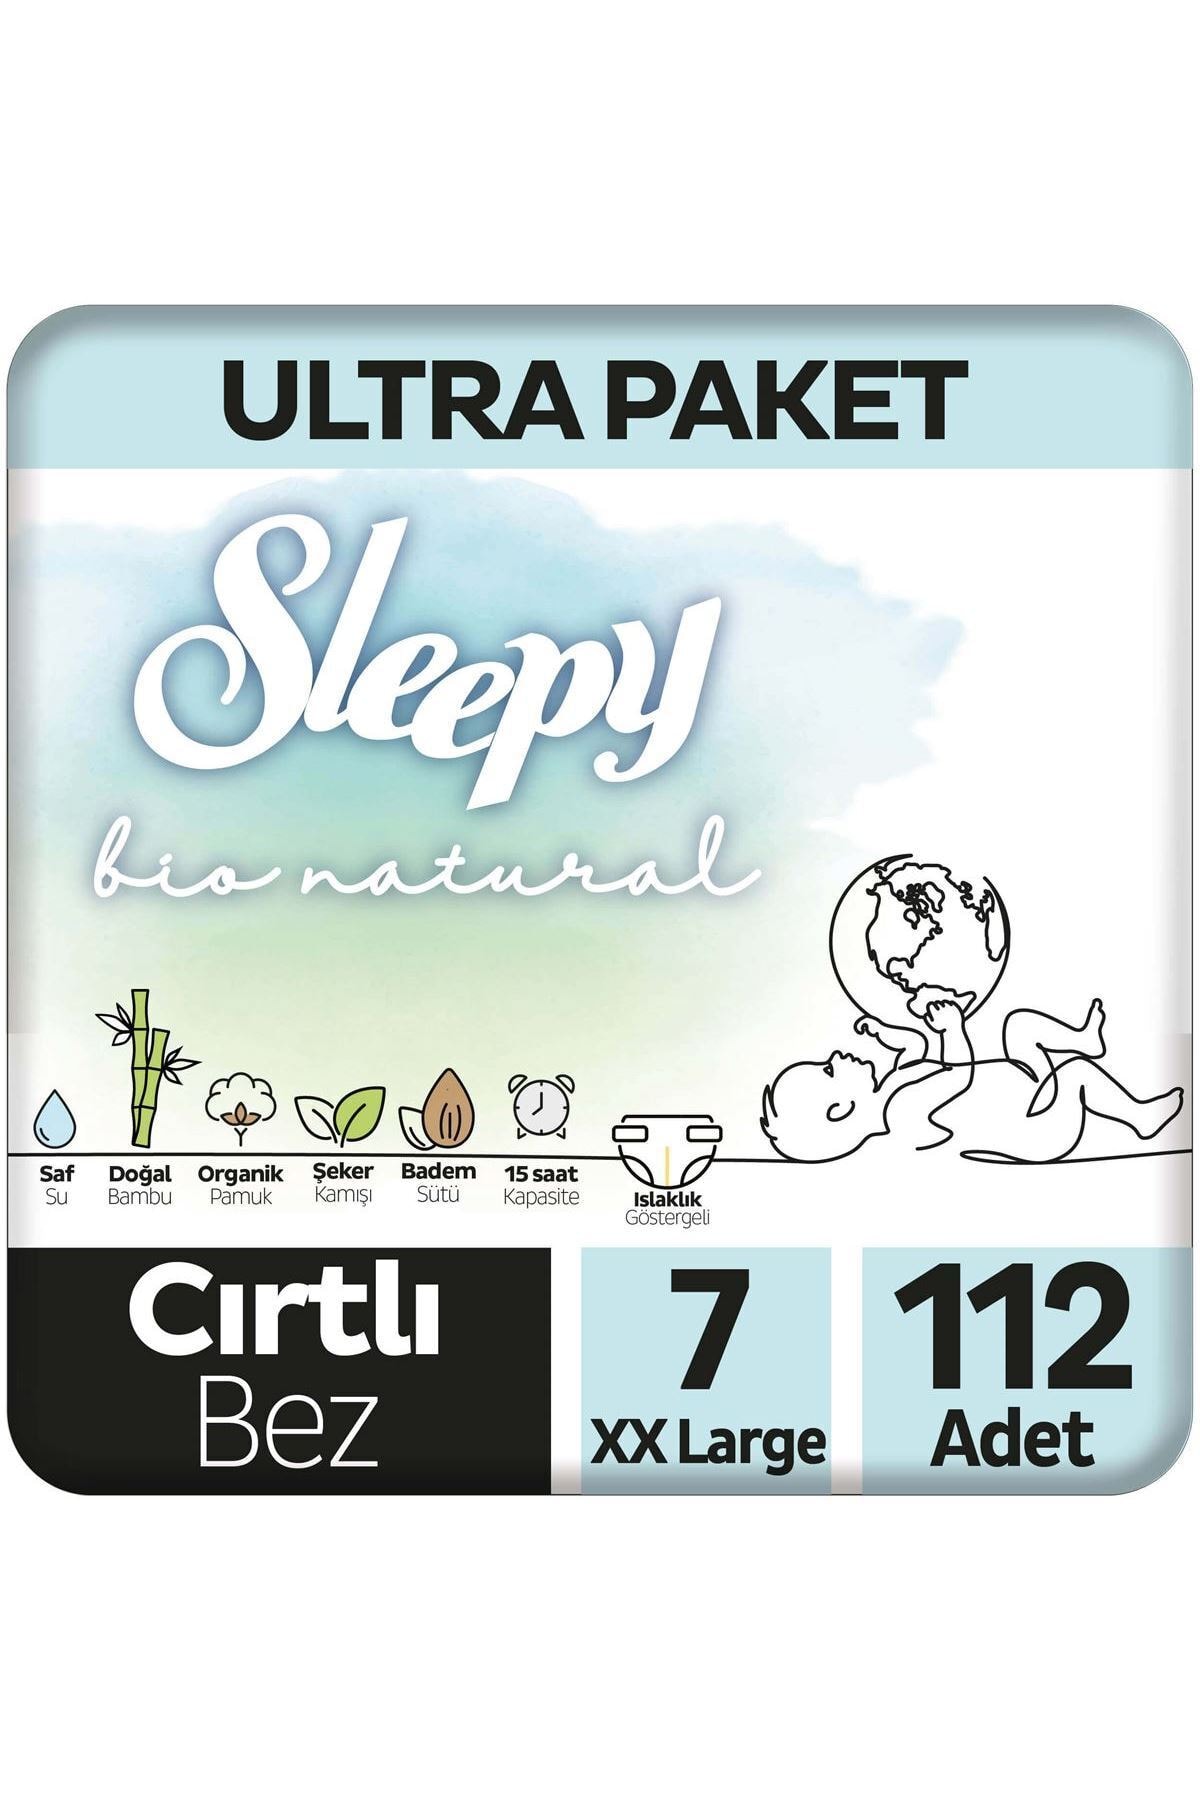 Sleepy Bio Natural Ultra Paket Bebek Bezi 7 Numara Xxlarge 112 Adet